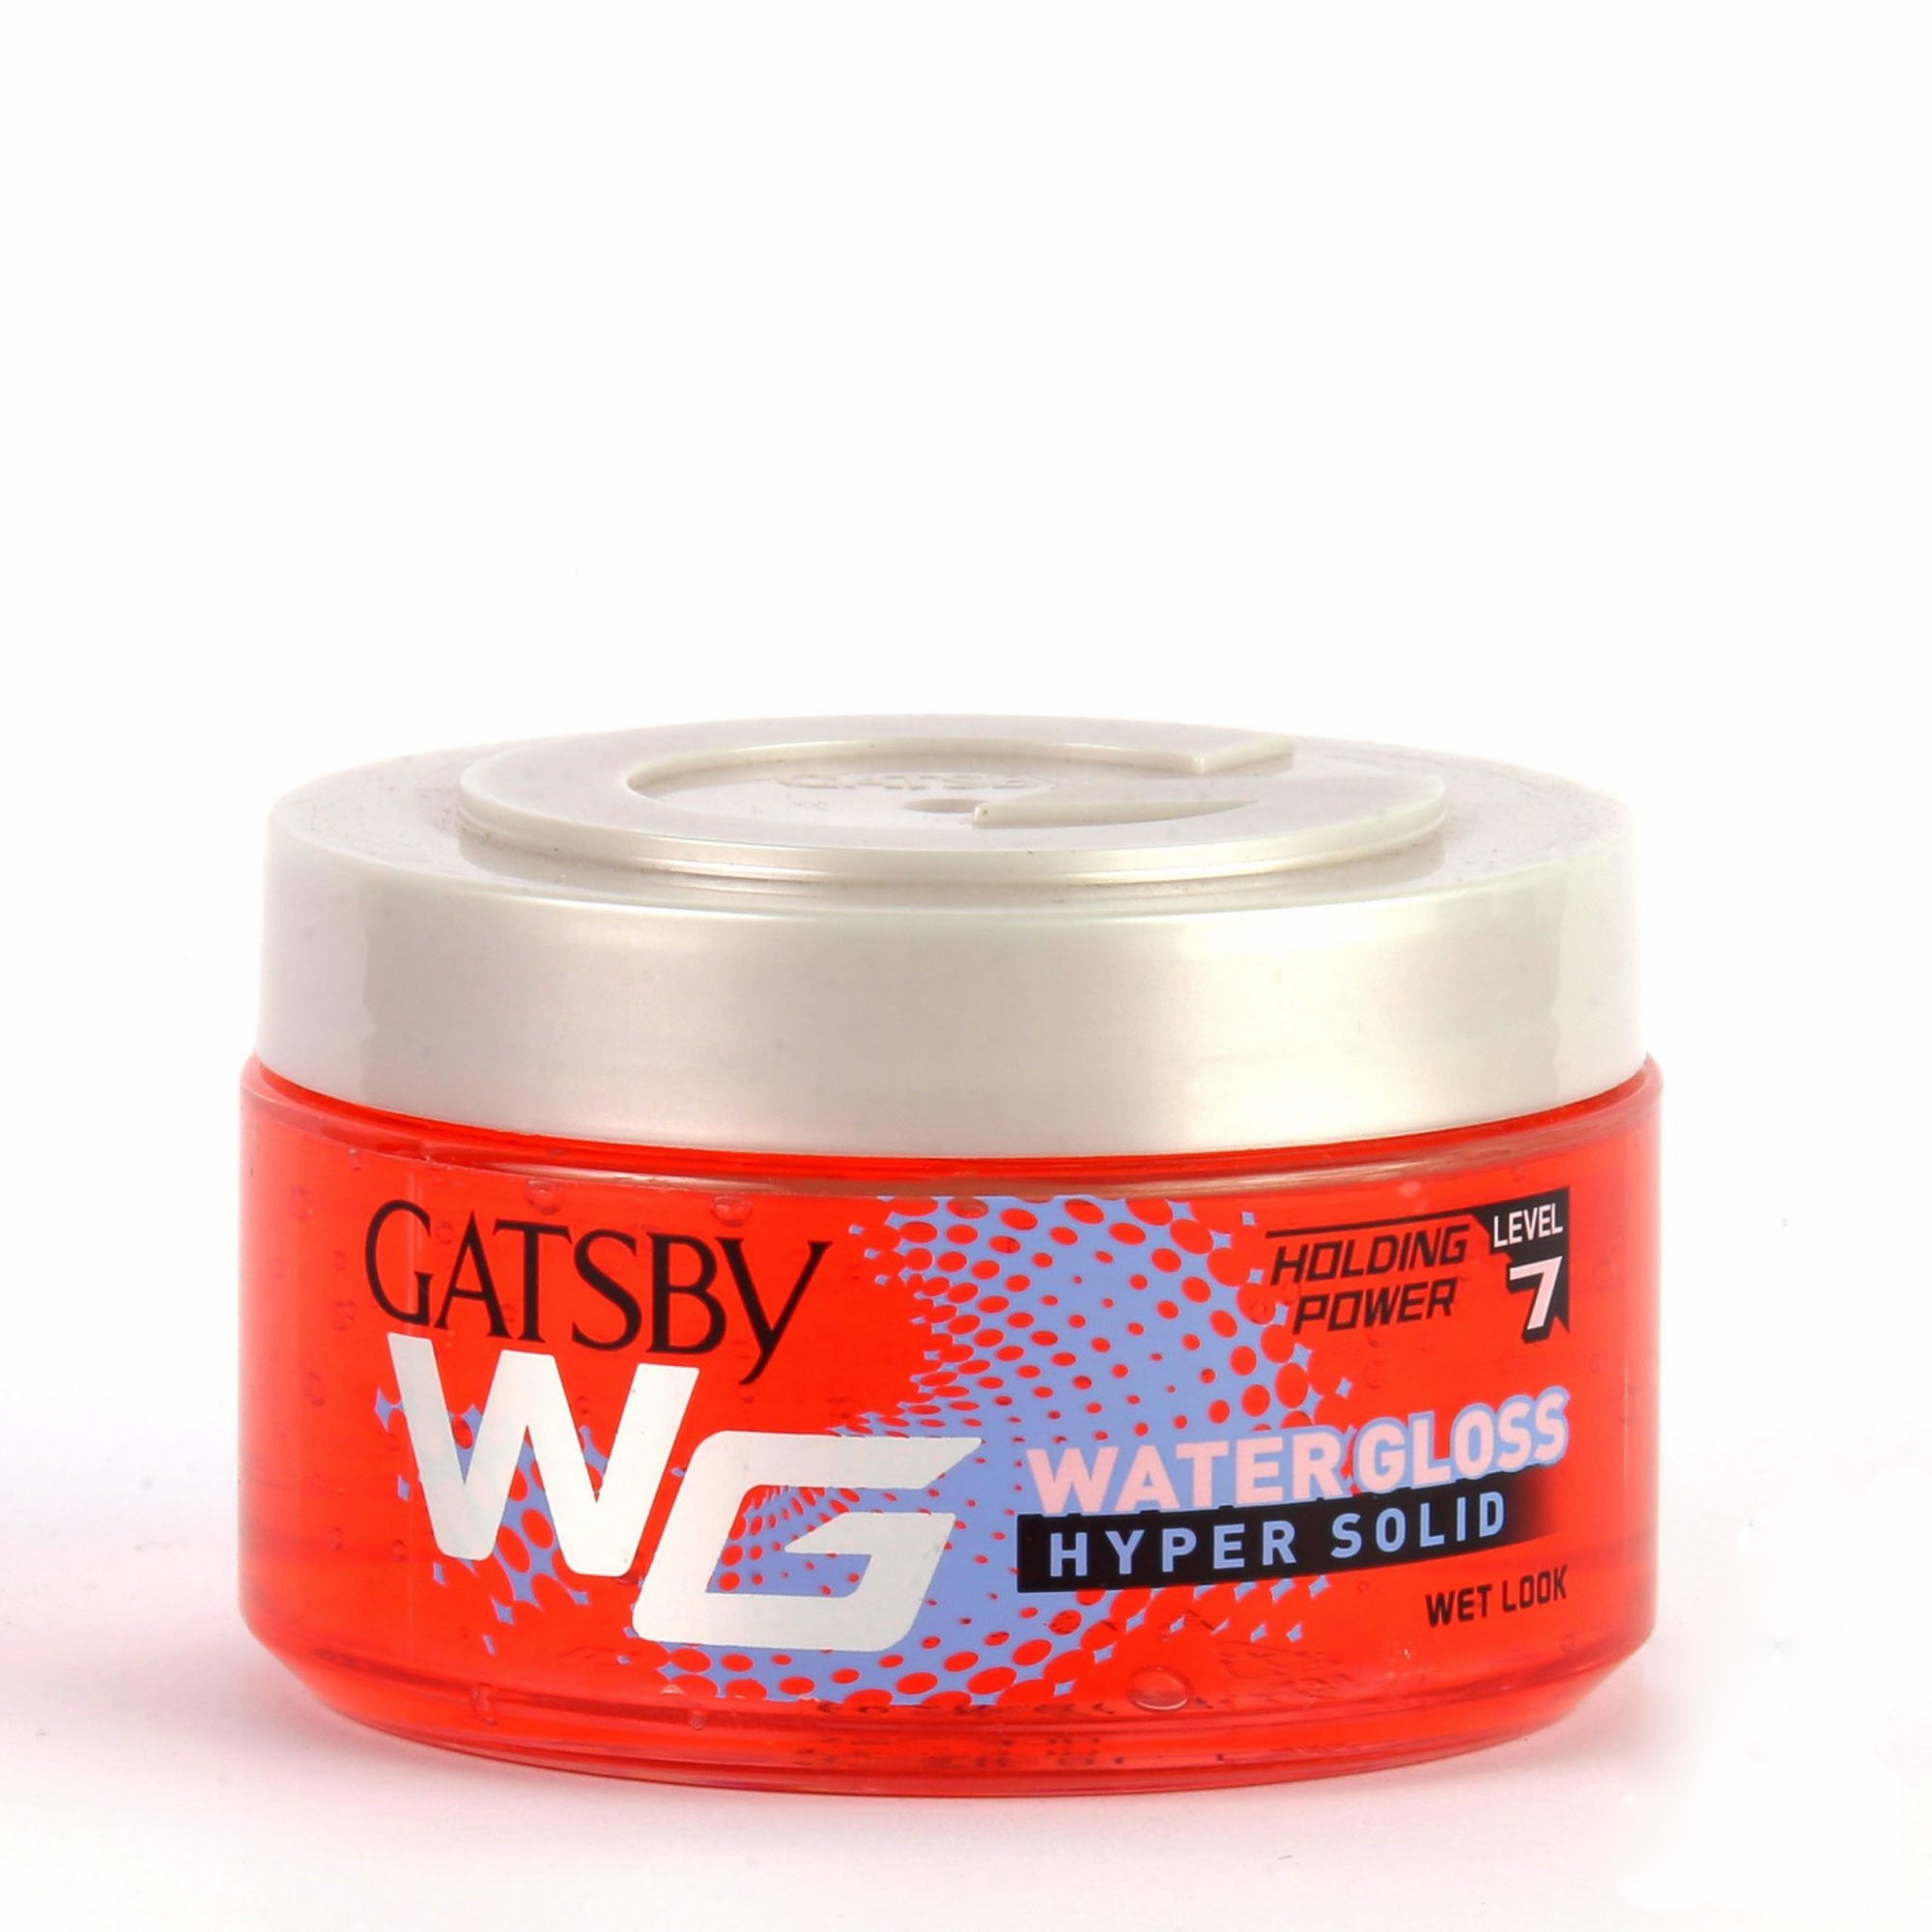 Gatsby Water Gloss Hyper Solid Level 07 150g freeshipping - lasertag.pk